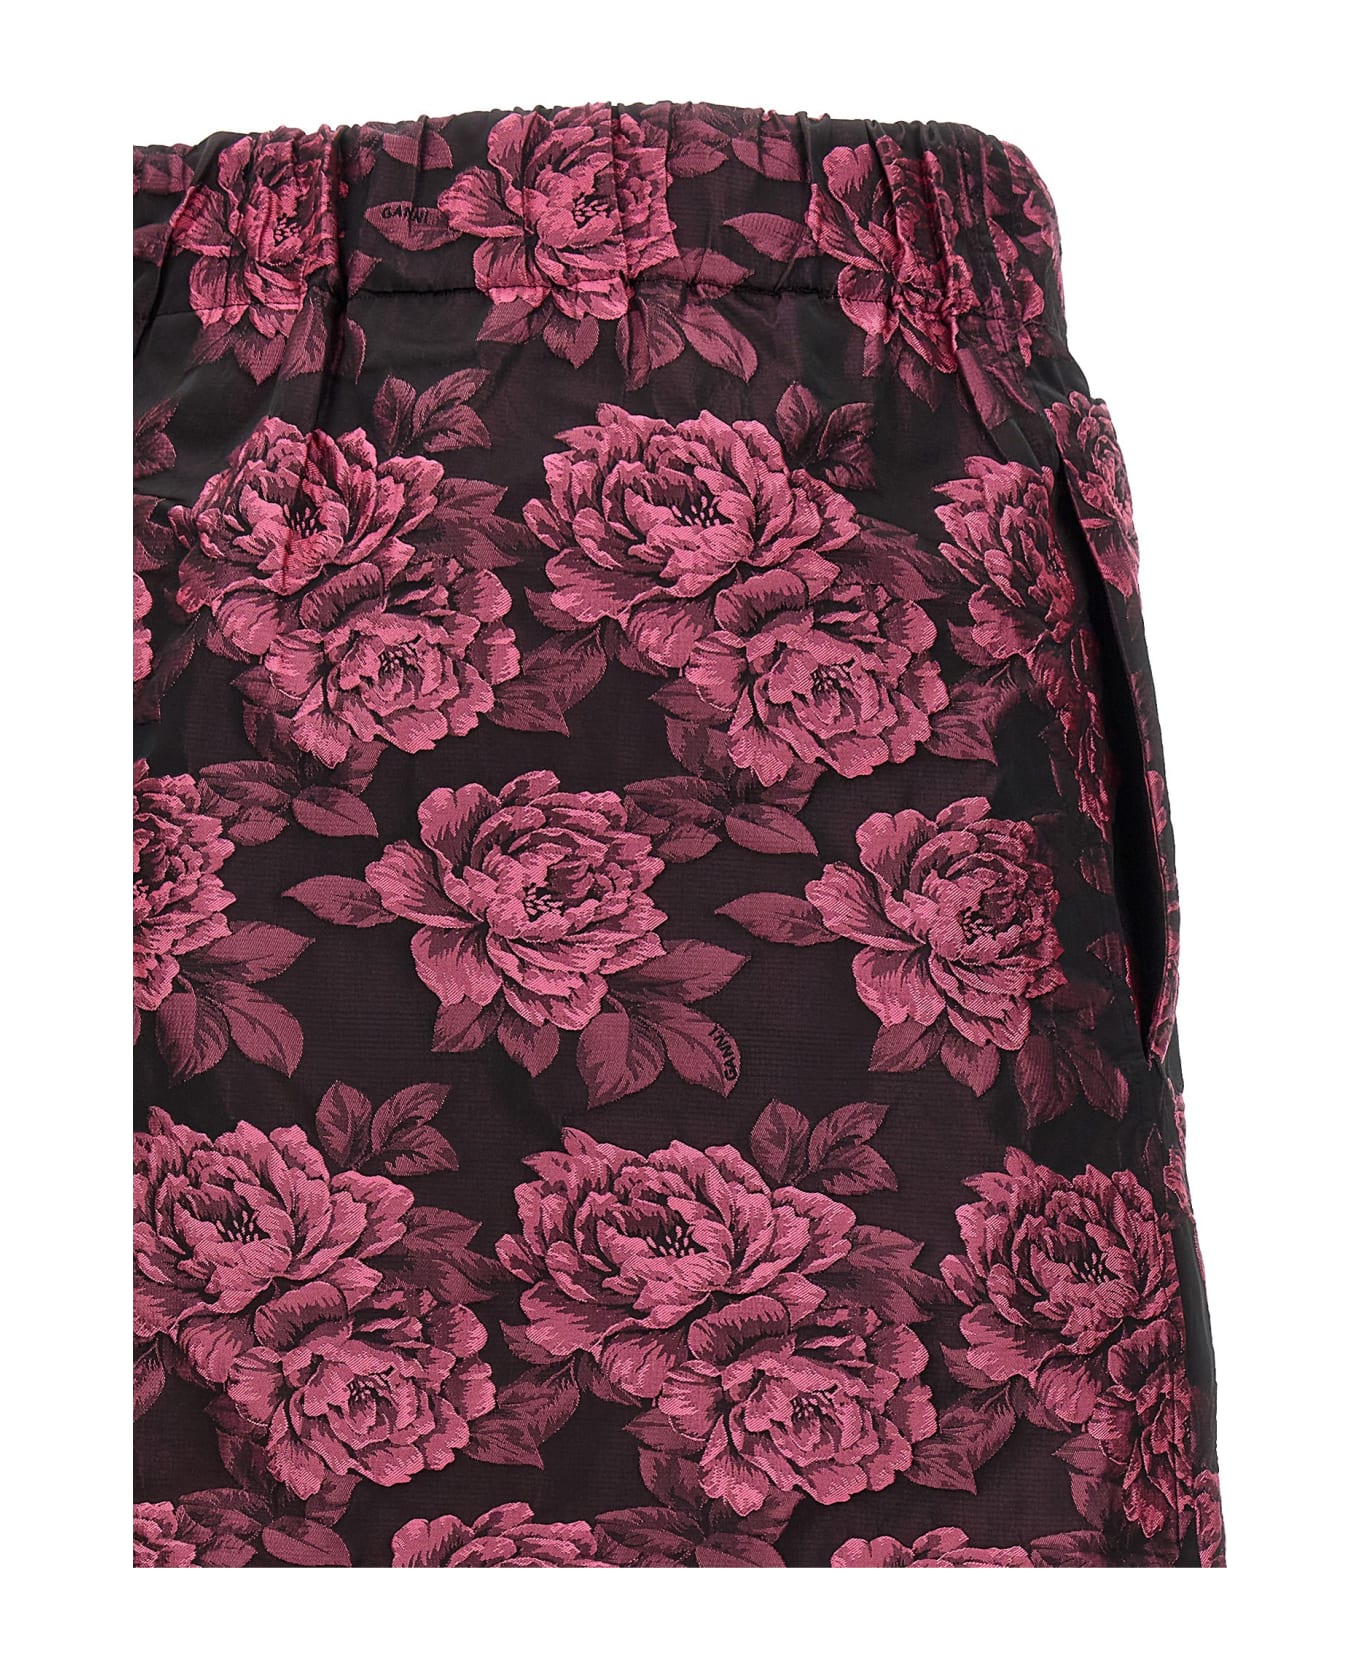 Ganni Floral Jacquard Skirt - Fuchsia